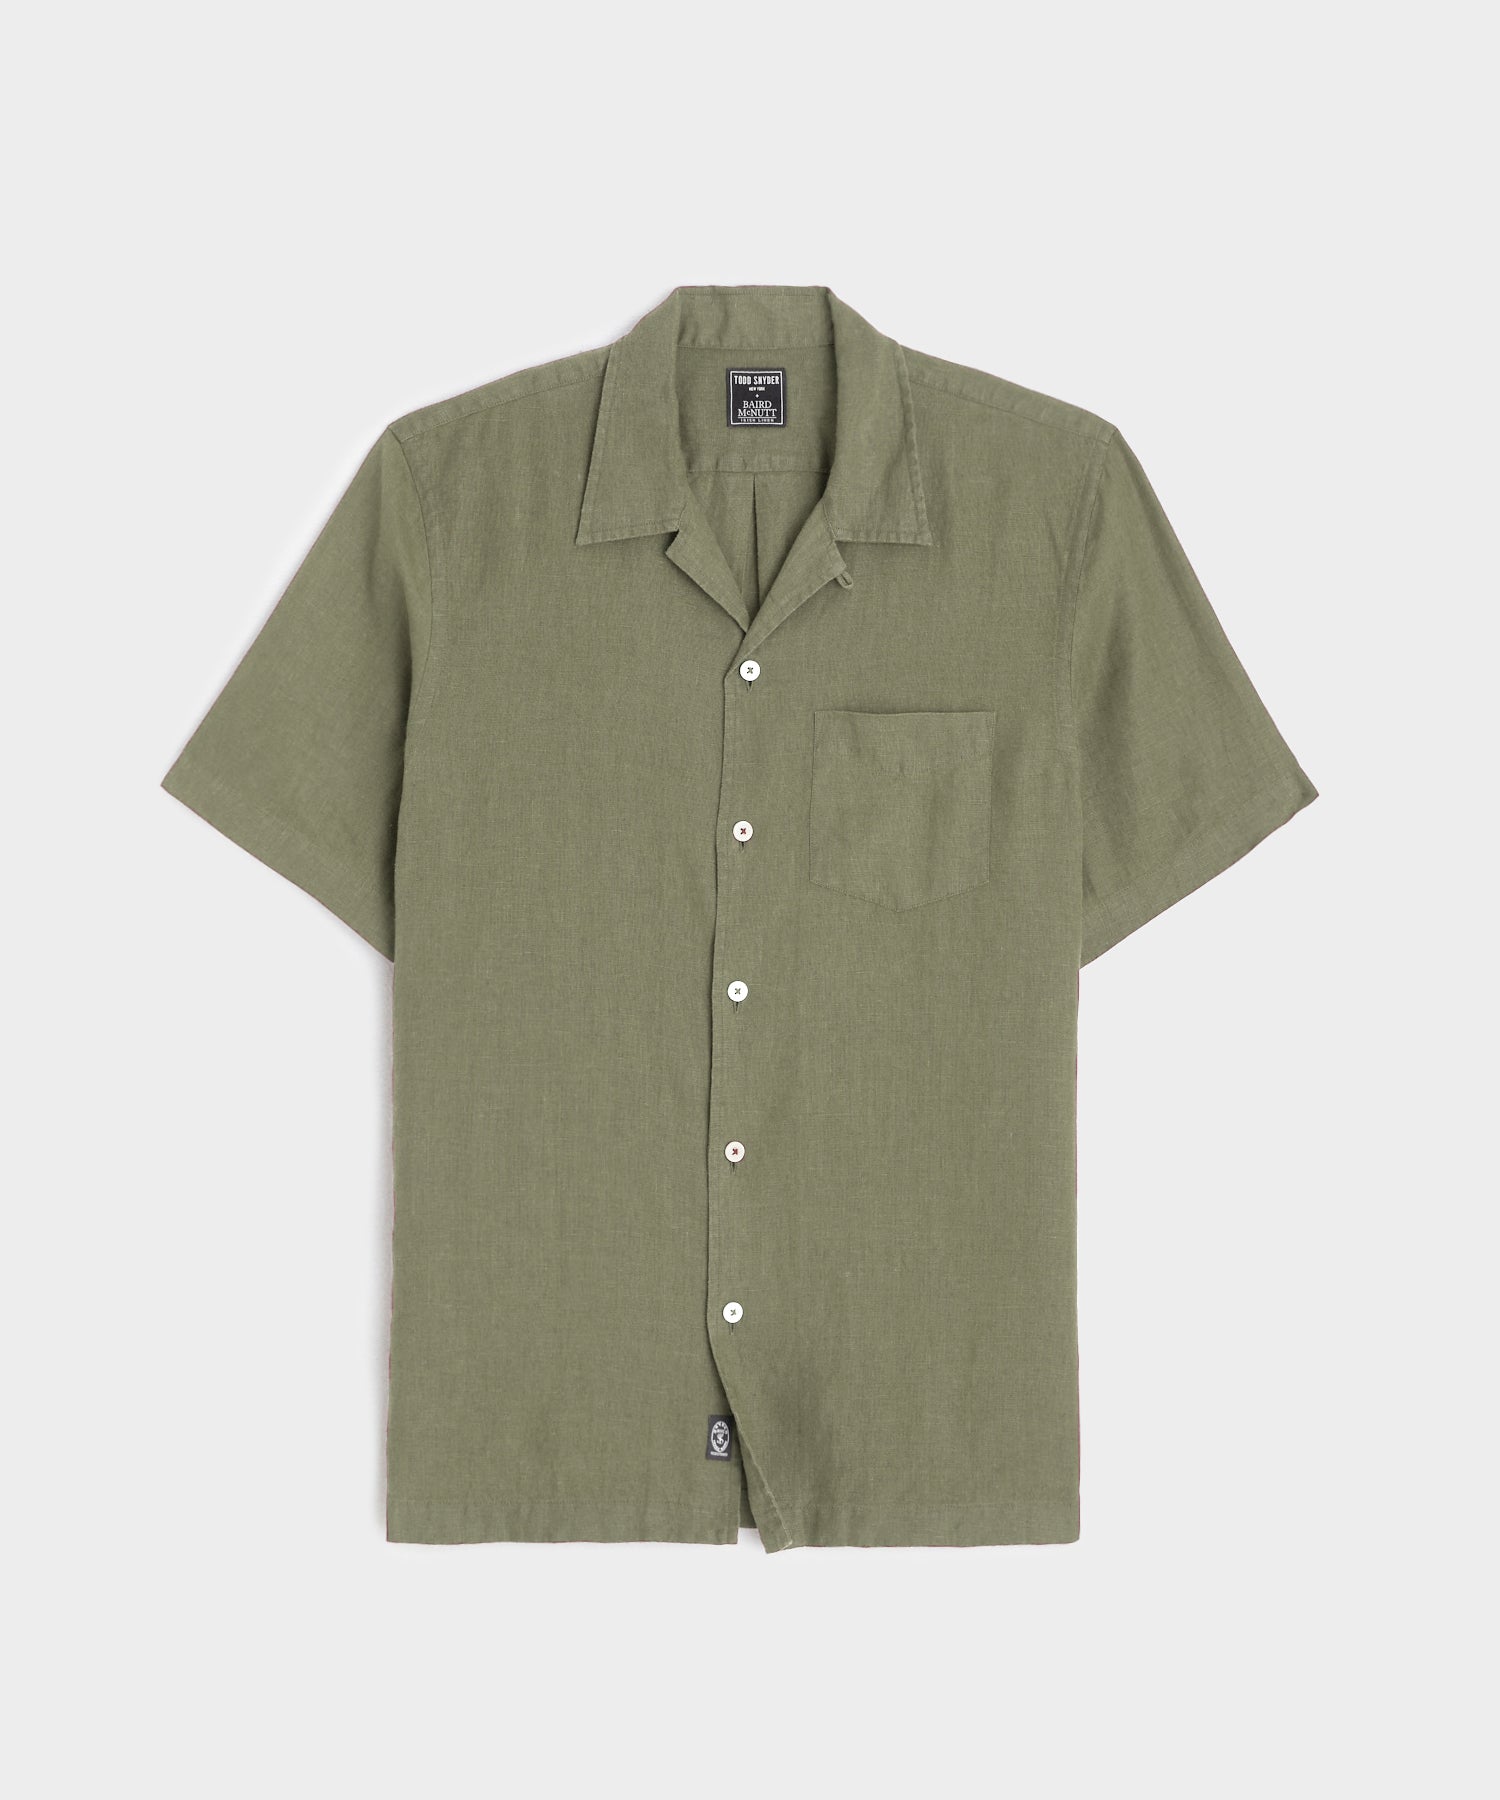 Sea Soft Irish Linen Camp Collar Shirt in Faded Surplus